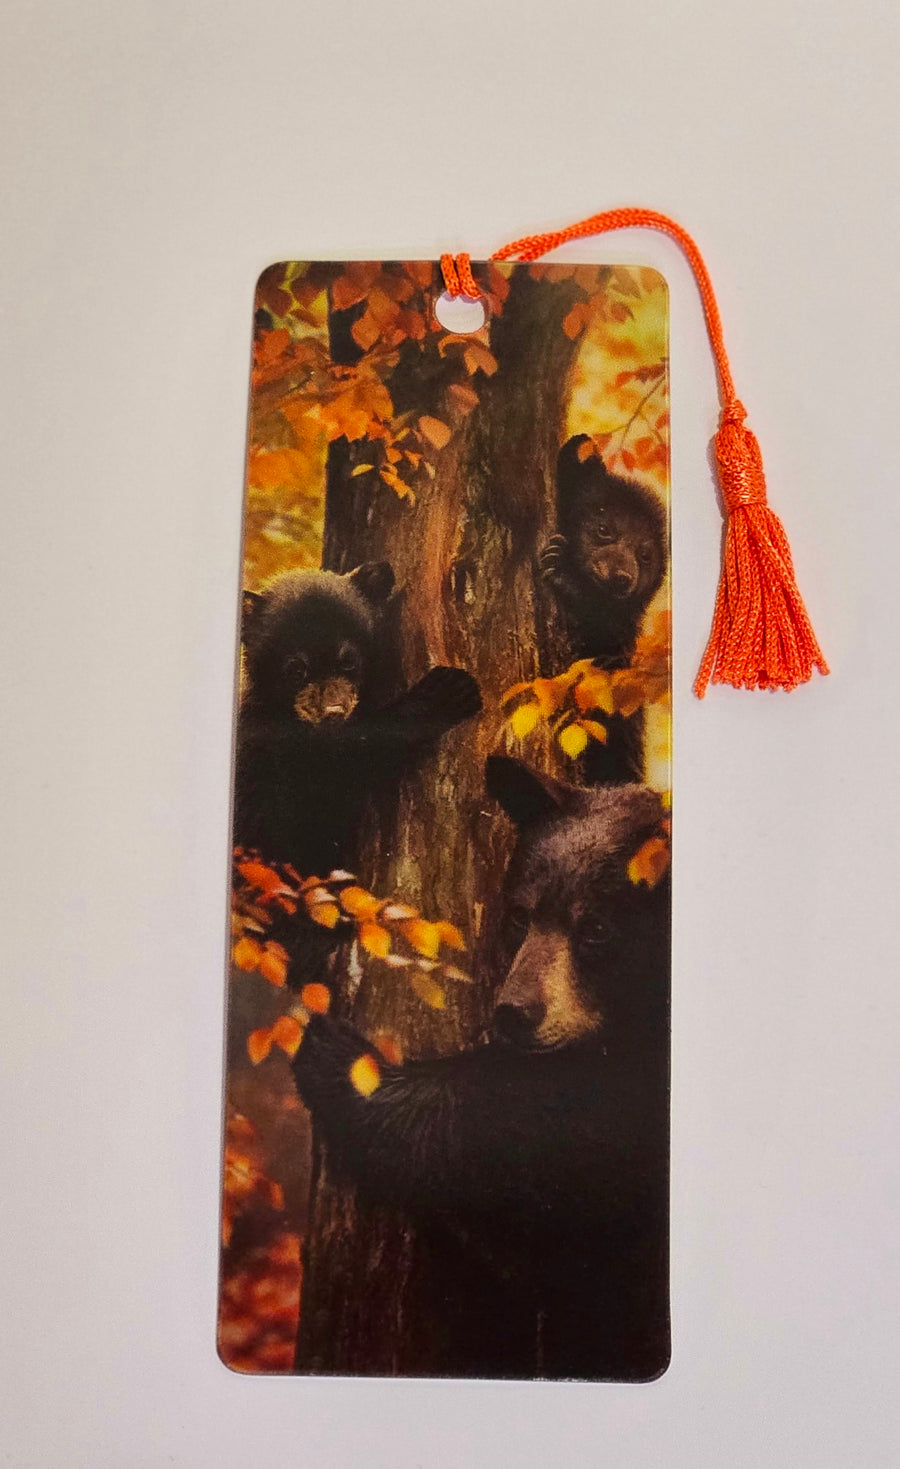 47376 3DB Black Bear & Cubs Bookmark